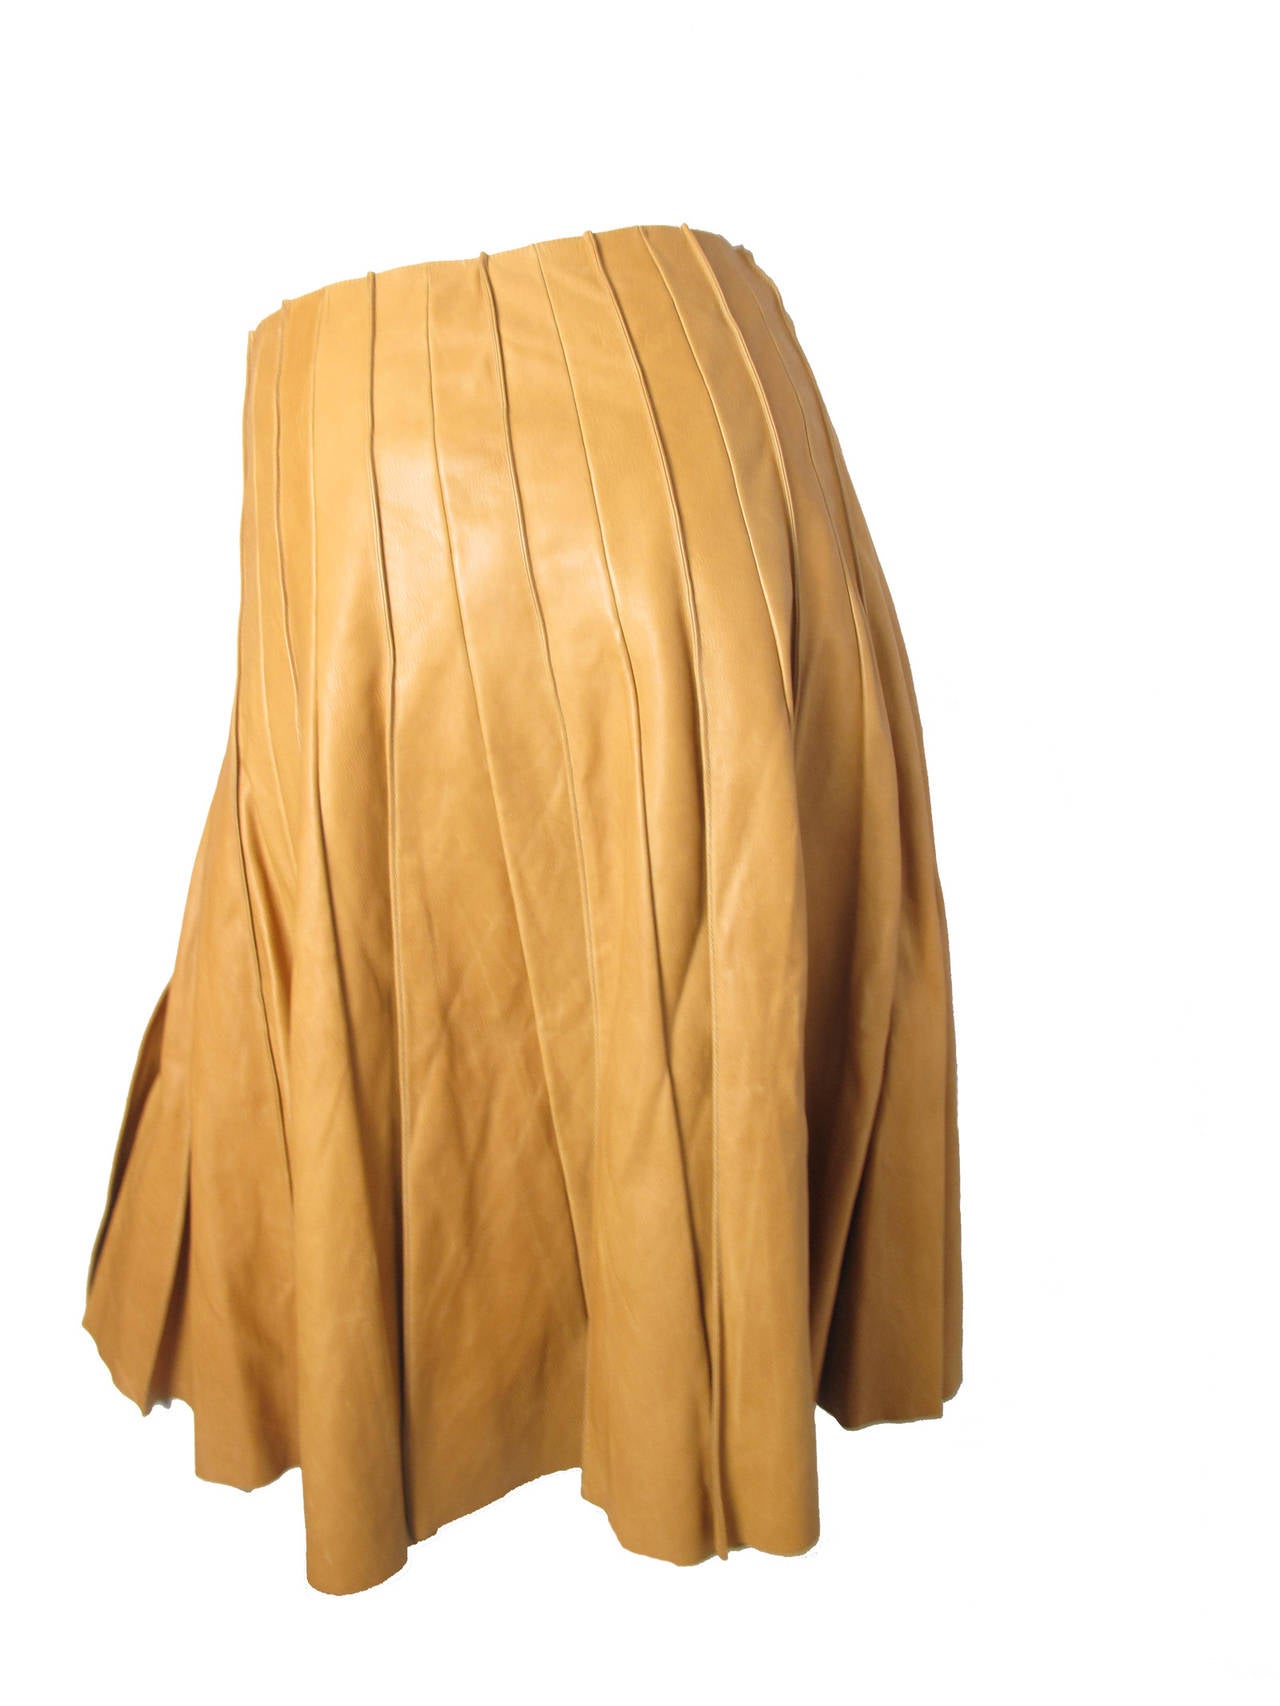 Women's Rare Hermes Soft Leather Pleated Skirt Runway by JPG